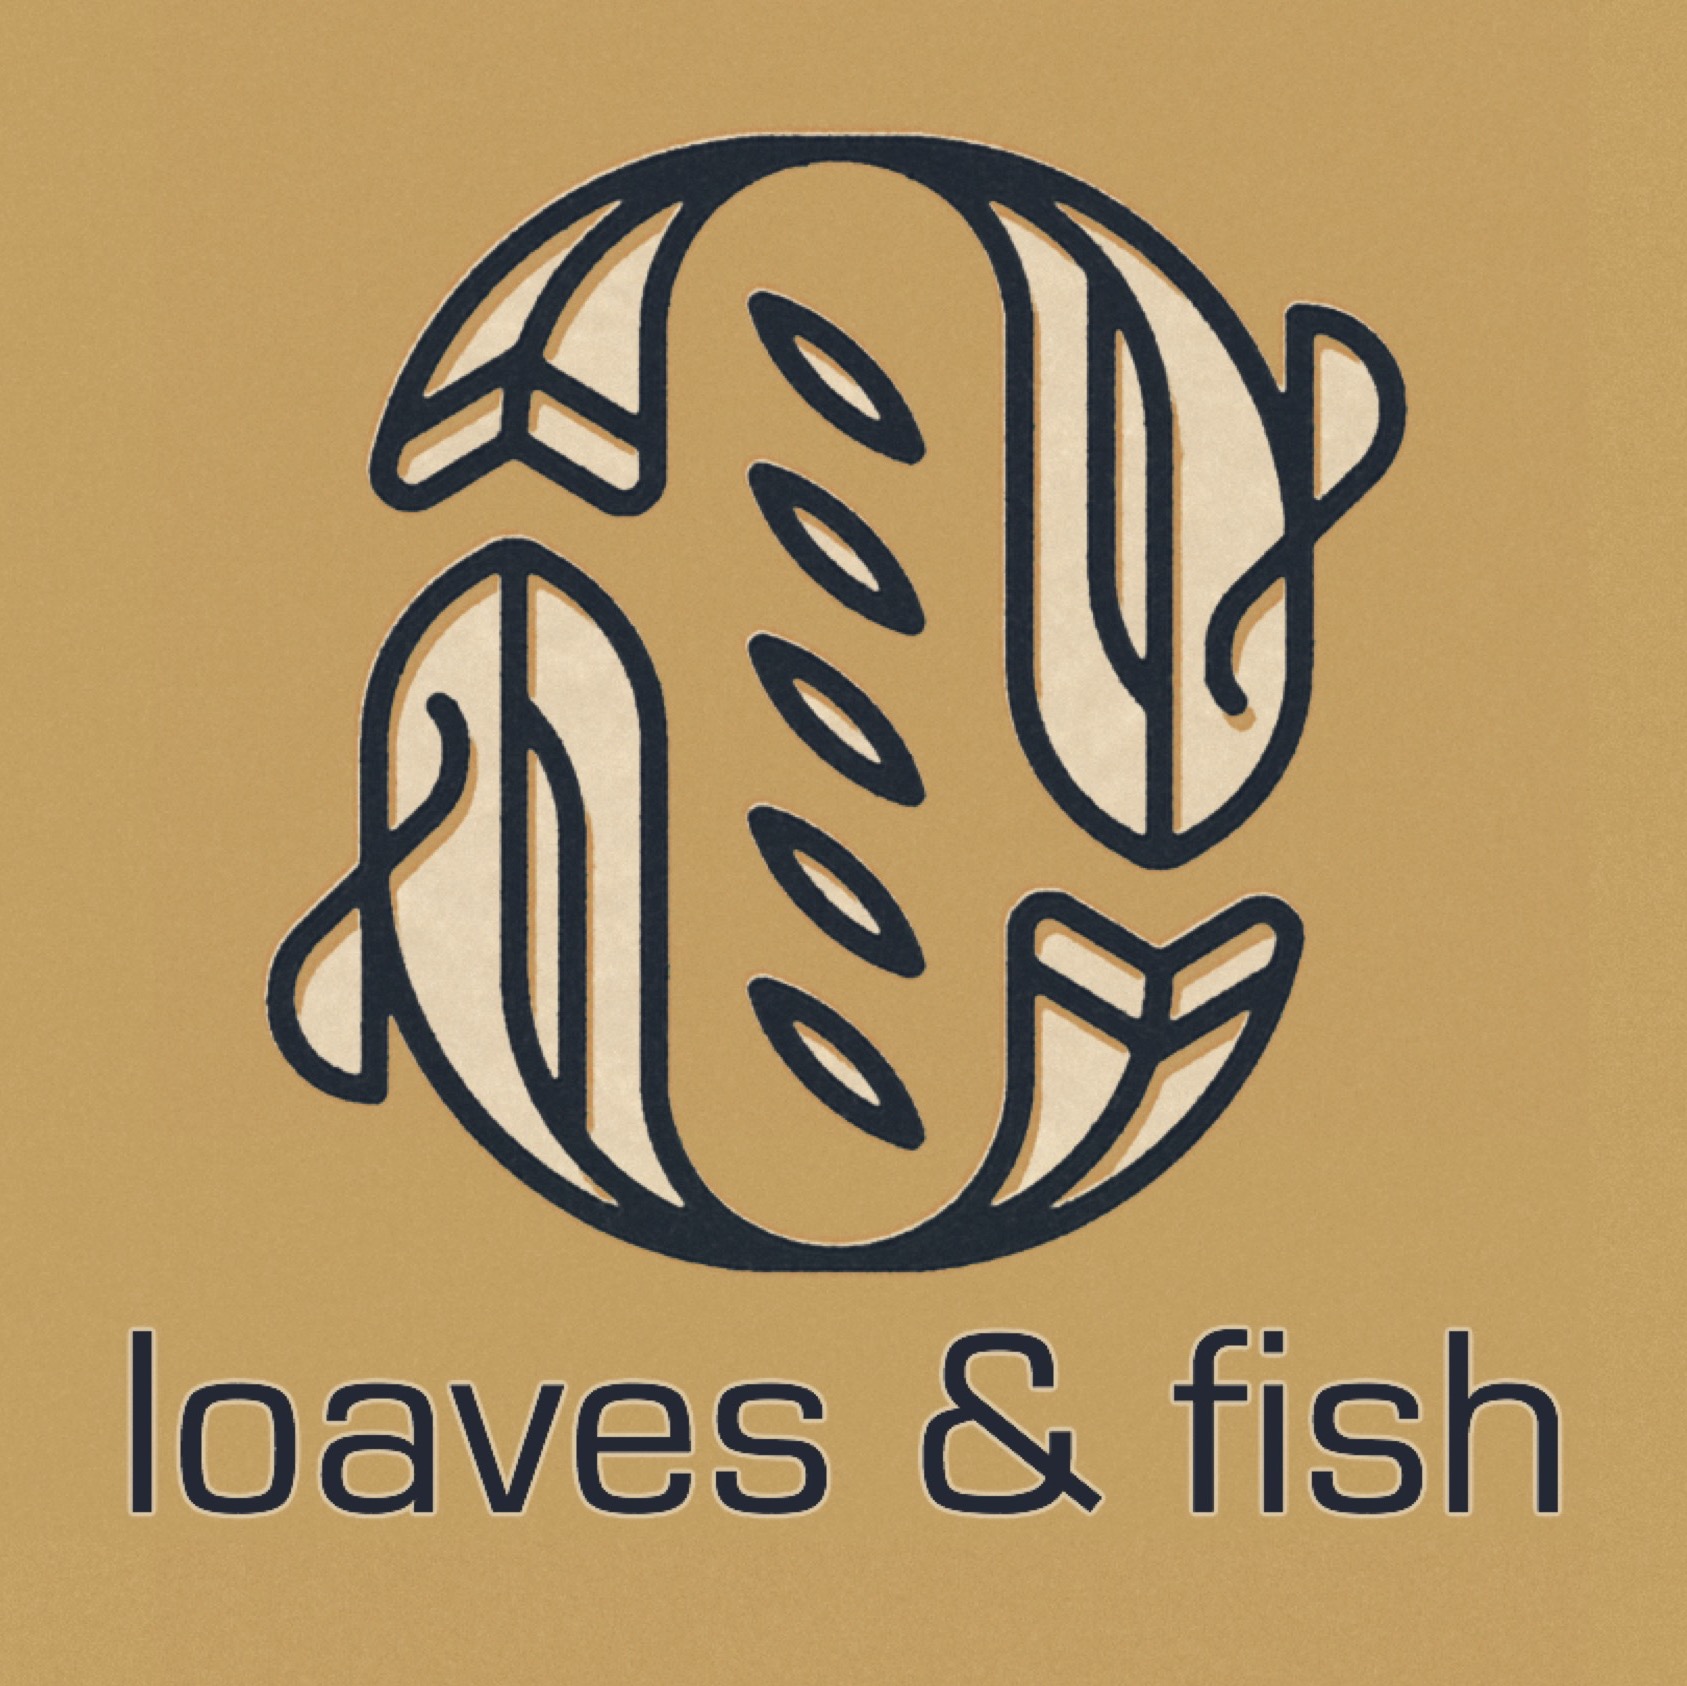 Ryan Post - "Loaves and Fish"